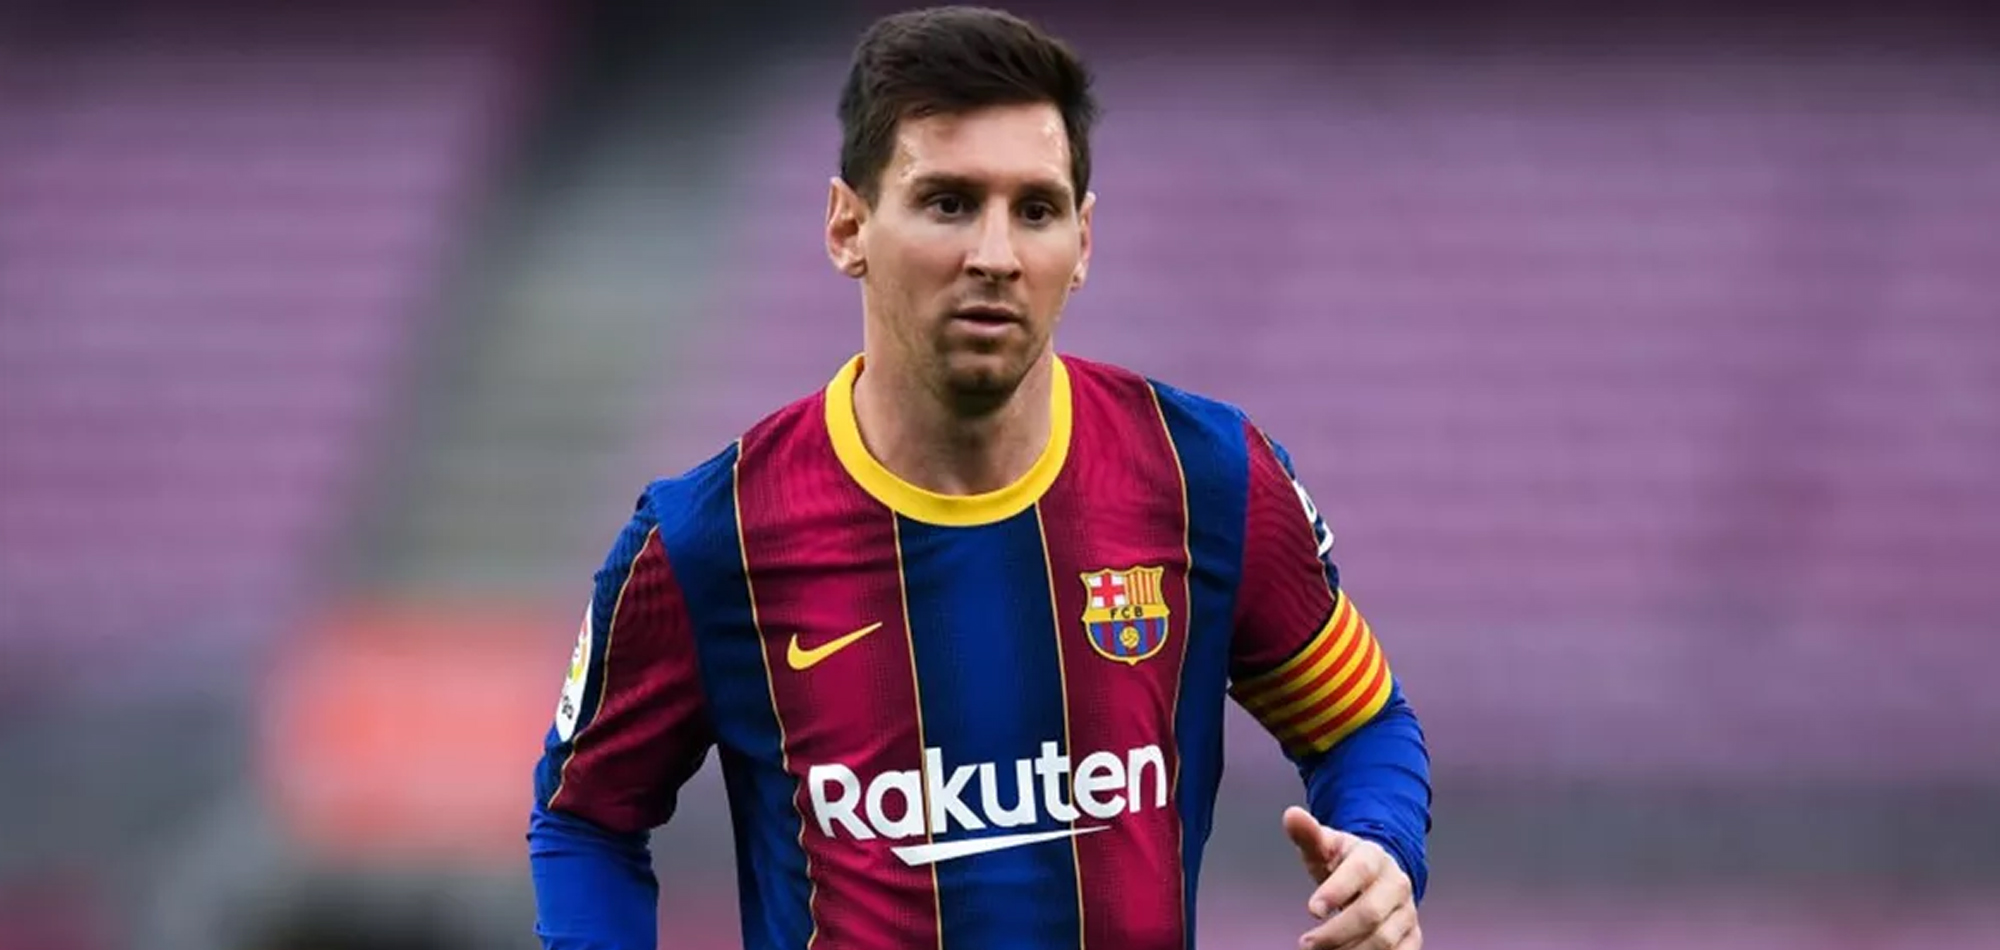 Barcelona confirm Messi departure after contract talks break down